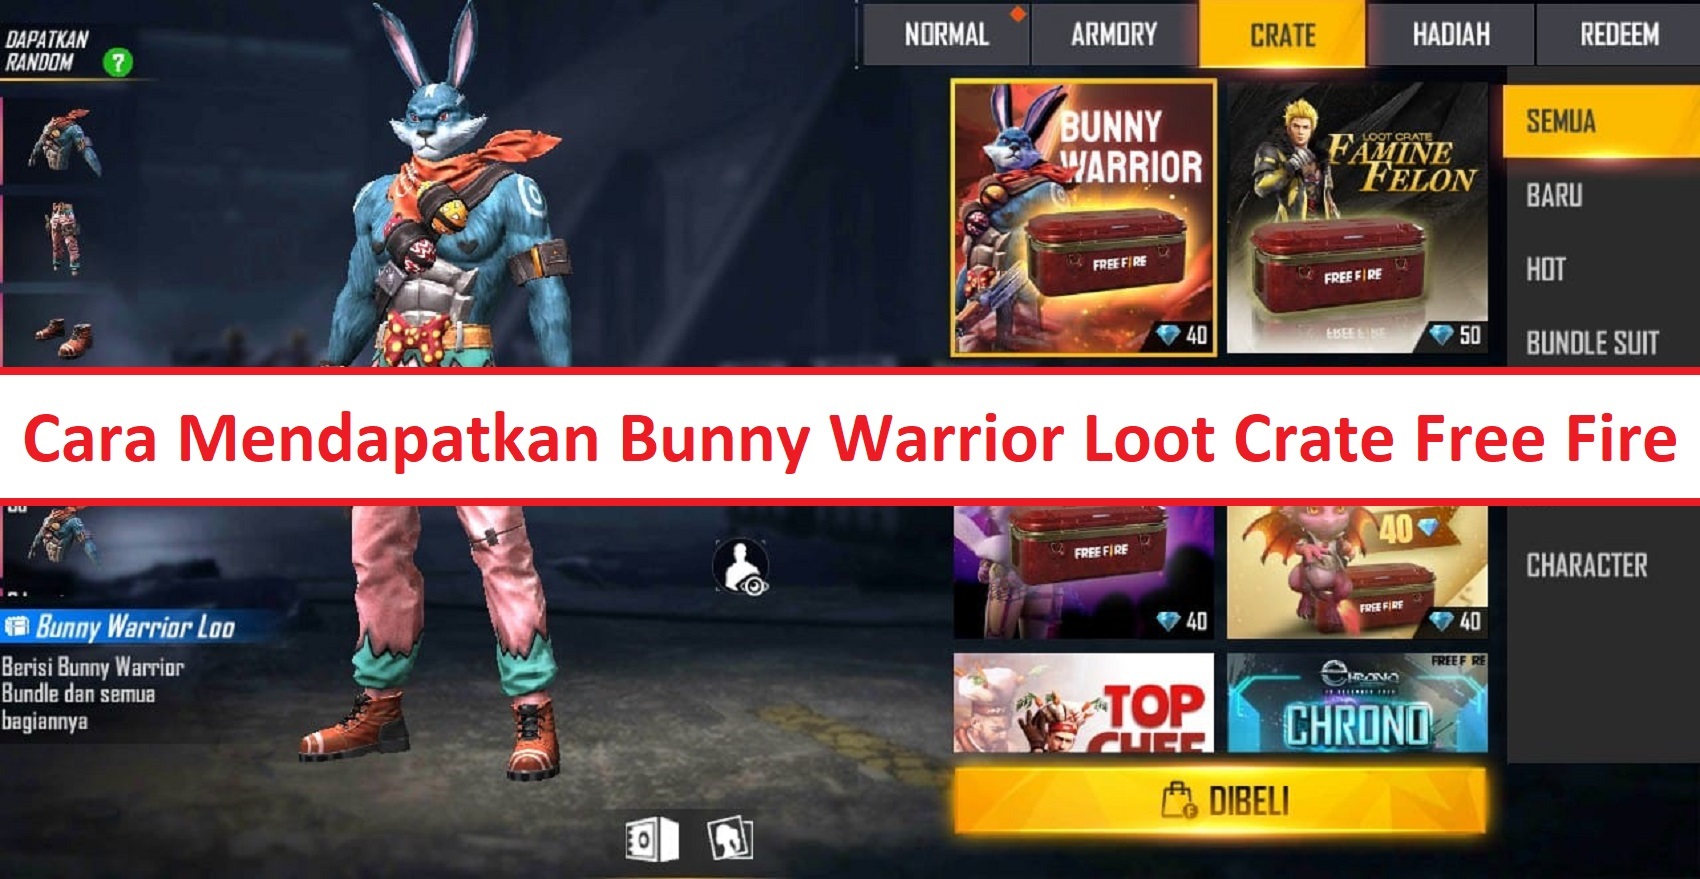 Cara Mendapatkan Bunny Warrior Loot Crate Free Fire (FF)